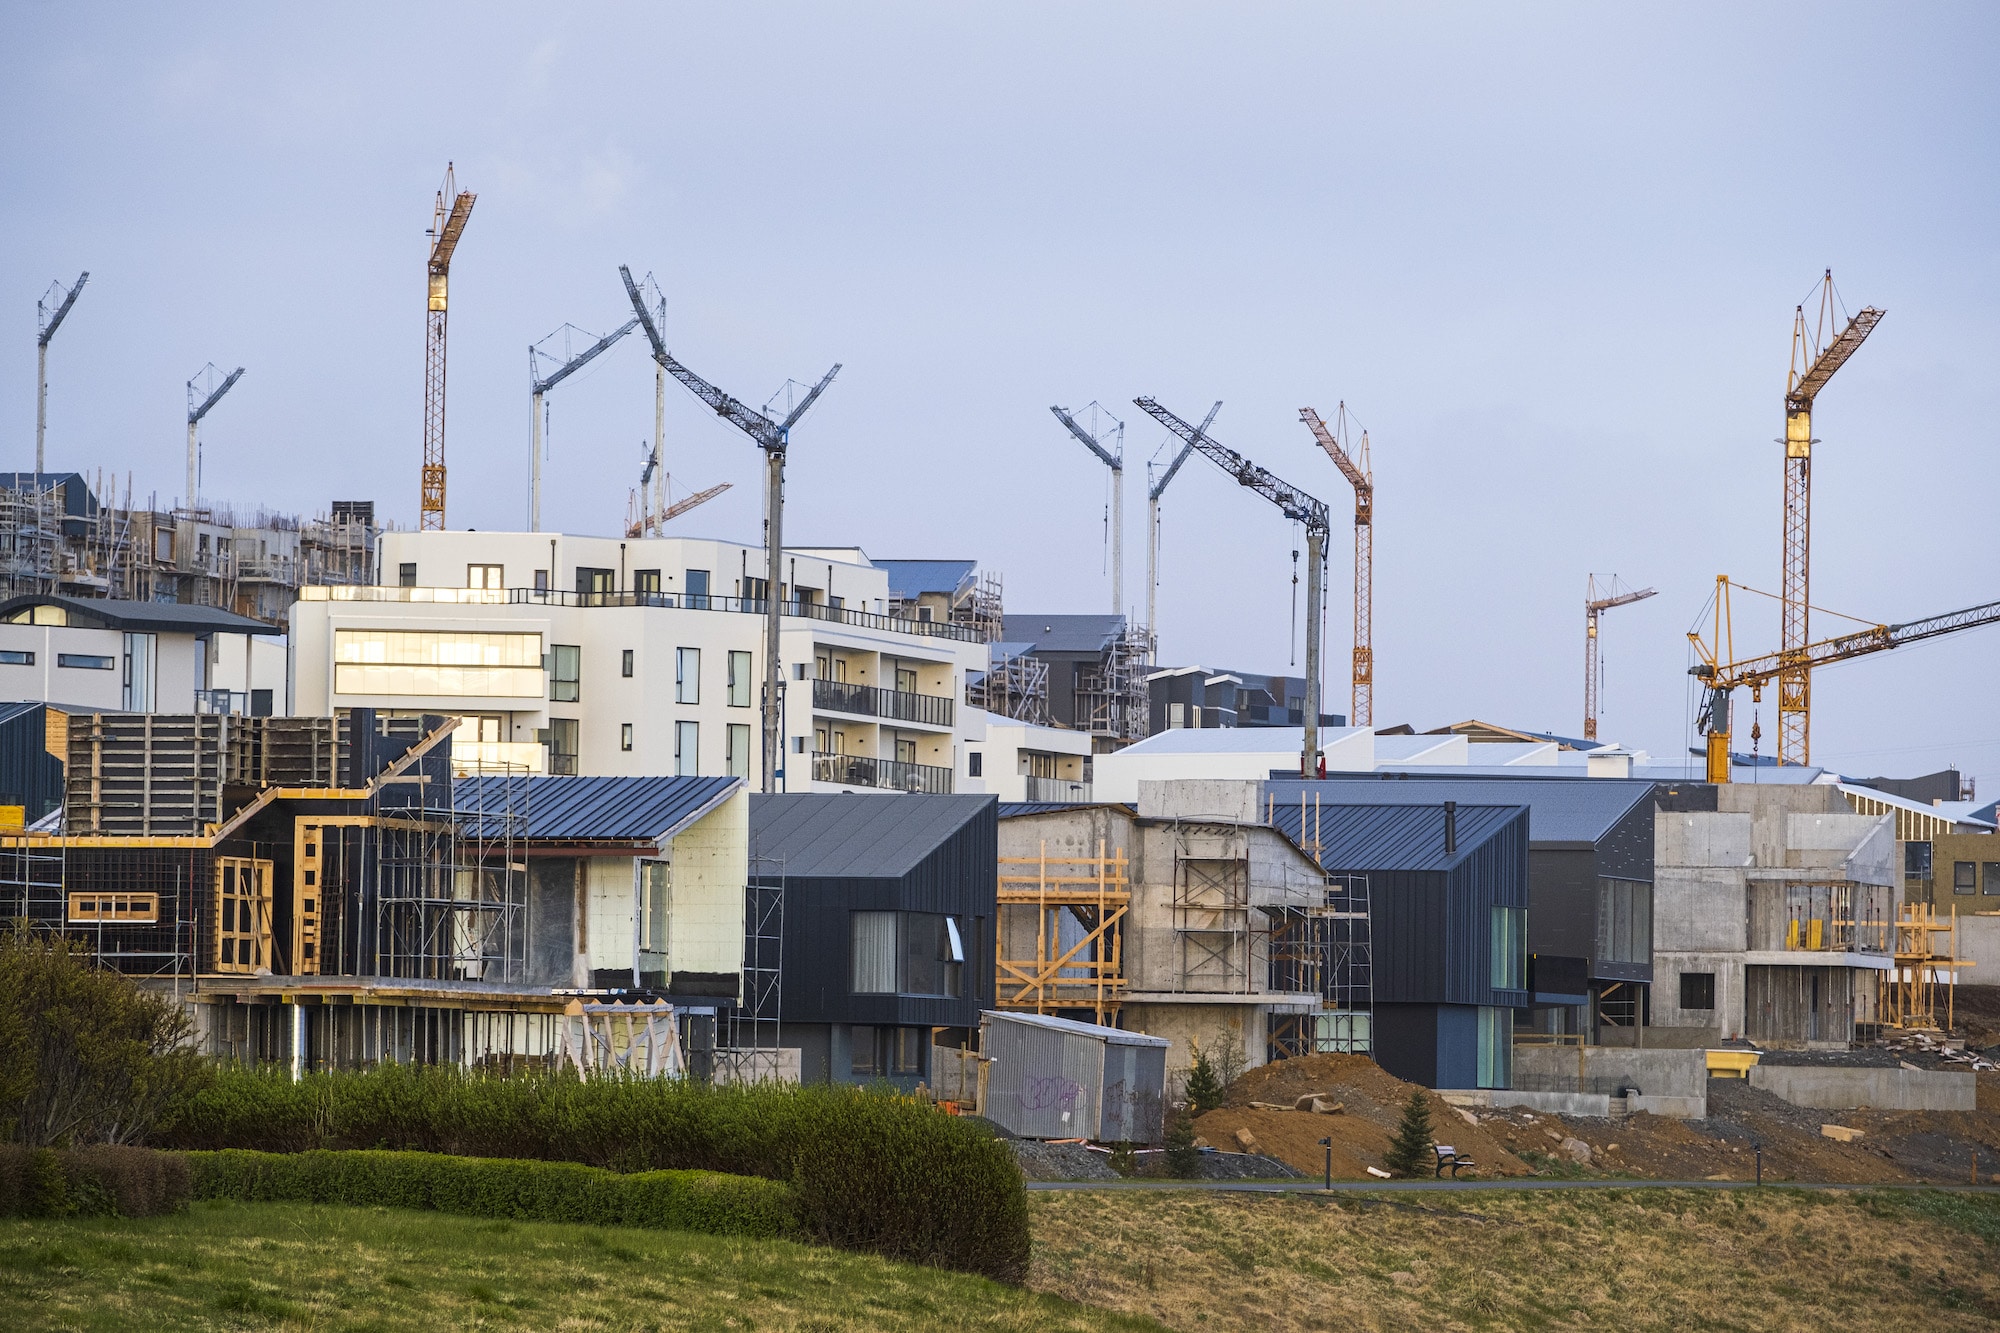 architecture Gardabær buildings crane urban planning Iceland housing